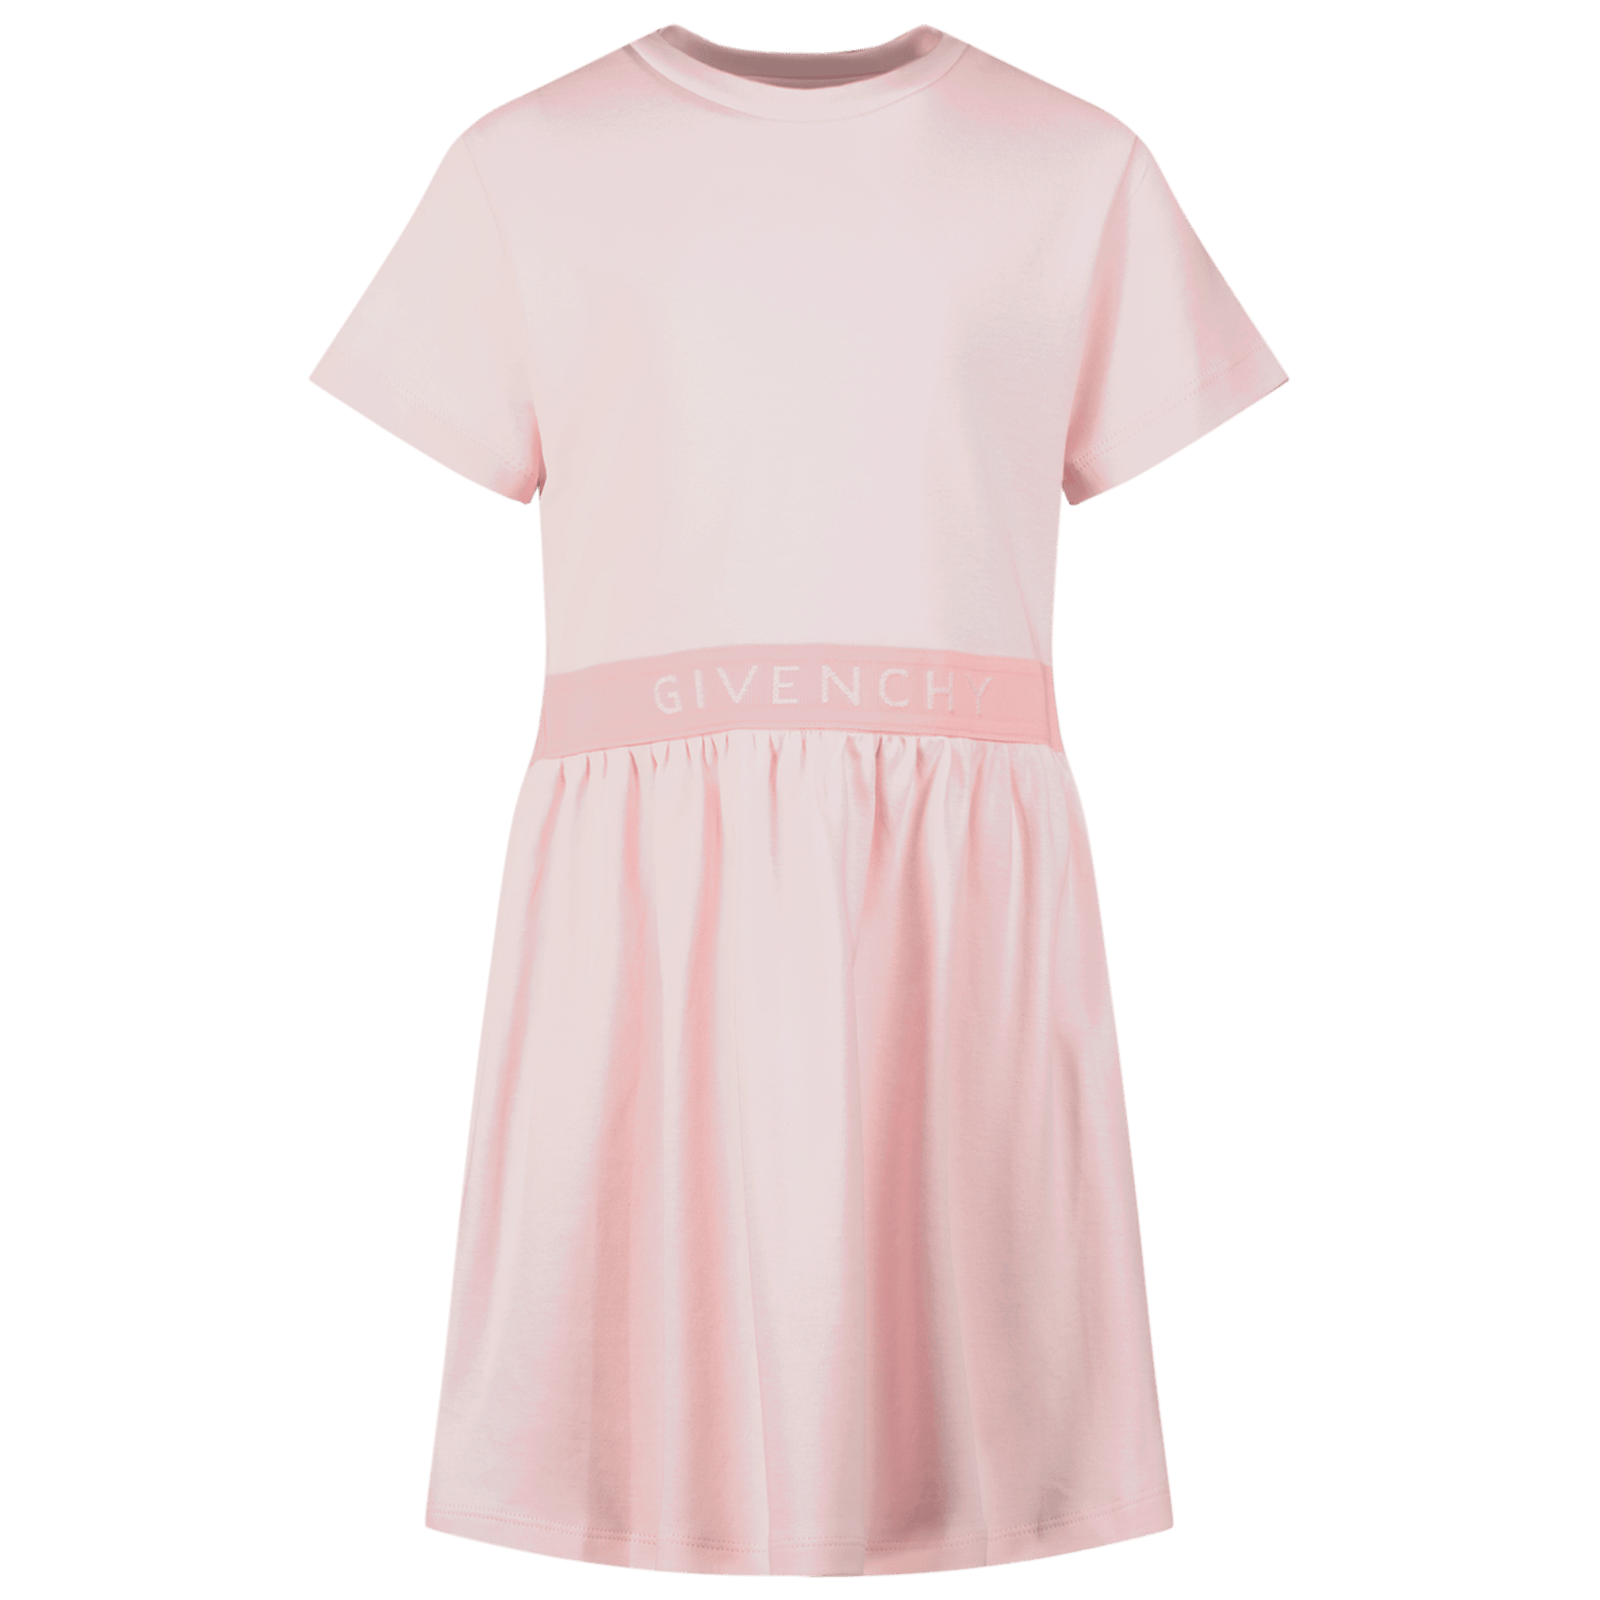 Givenchy Kids Girls Dress Light Pink